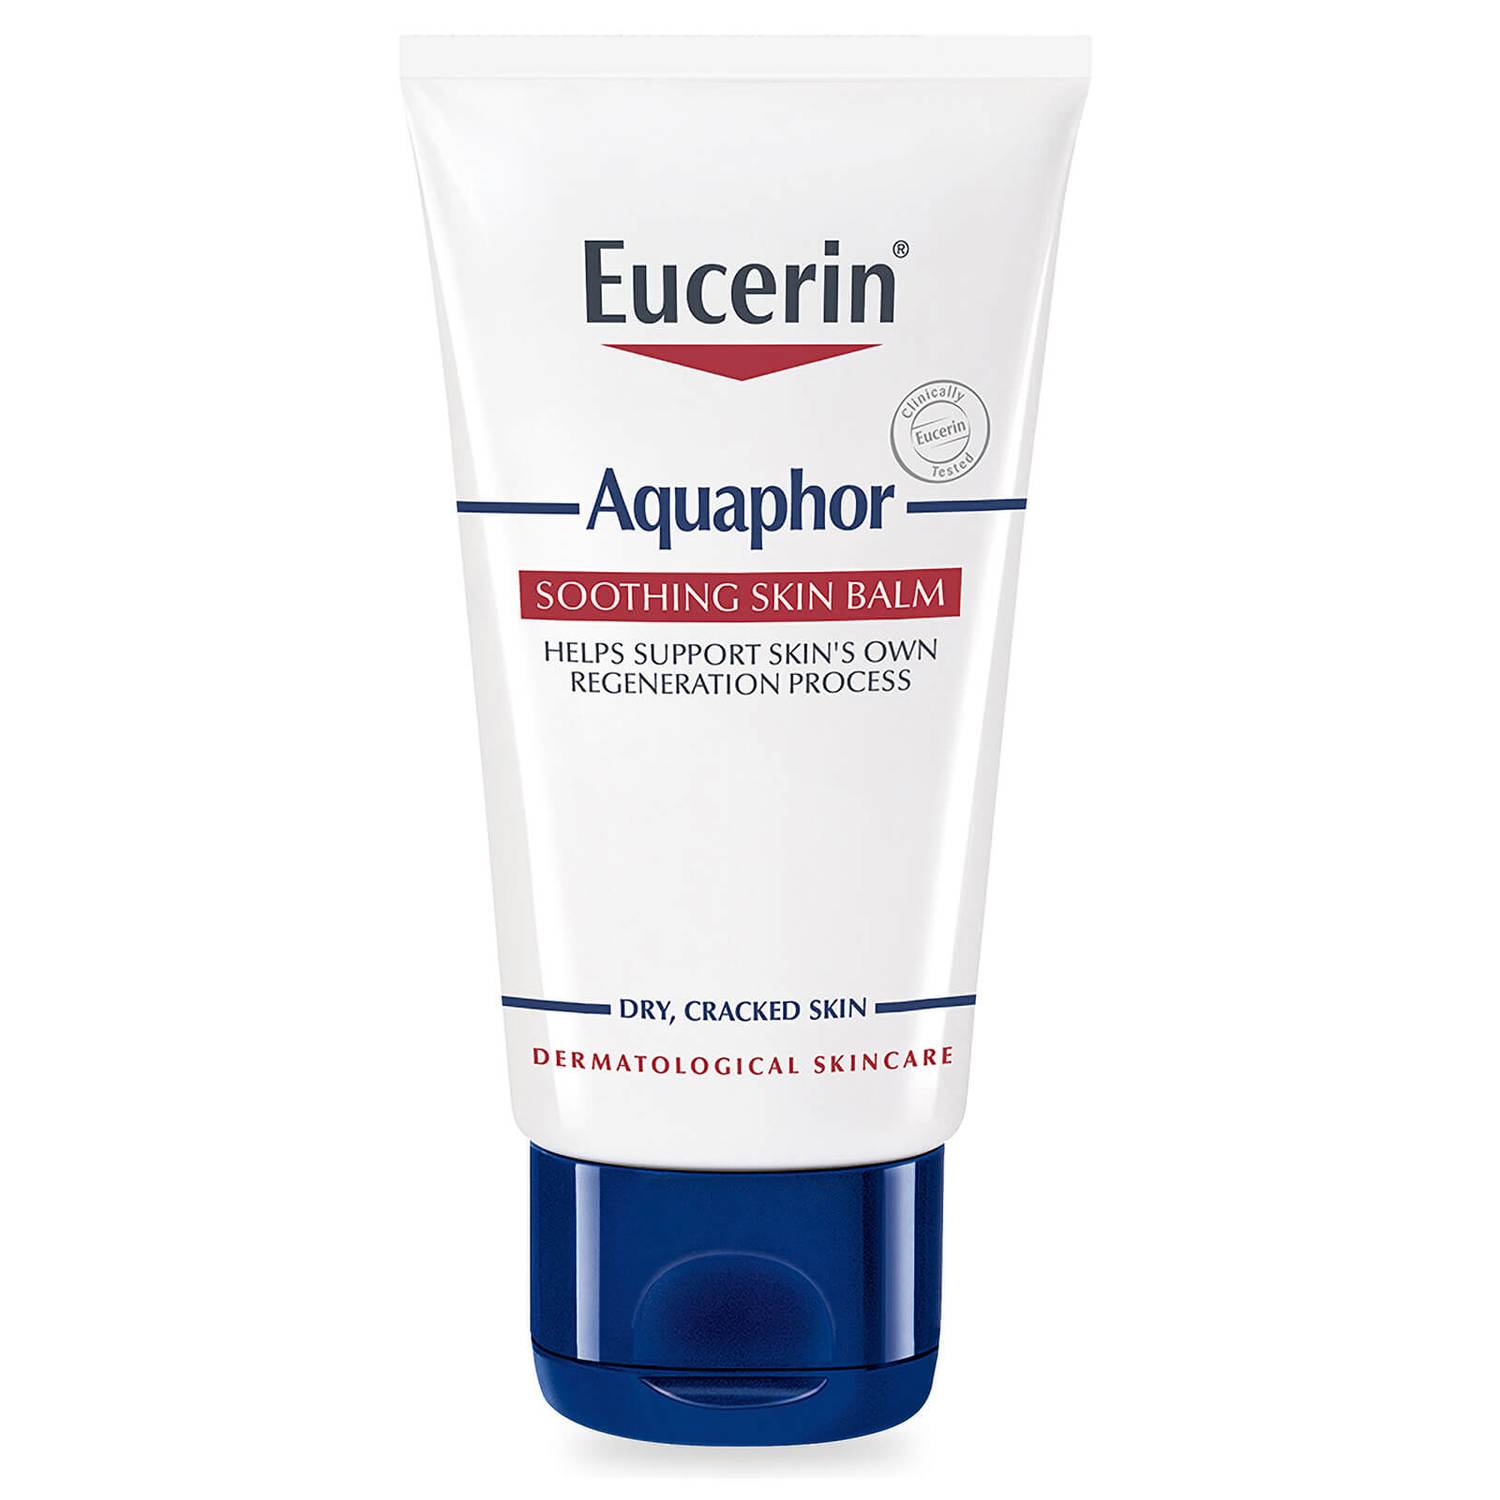 Eucerin Aquaphor 45ml Soothing Balm